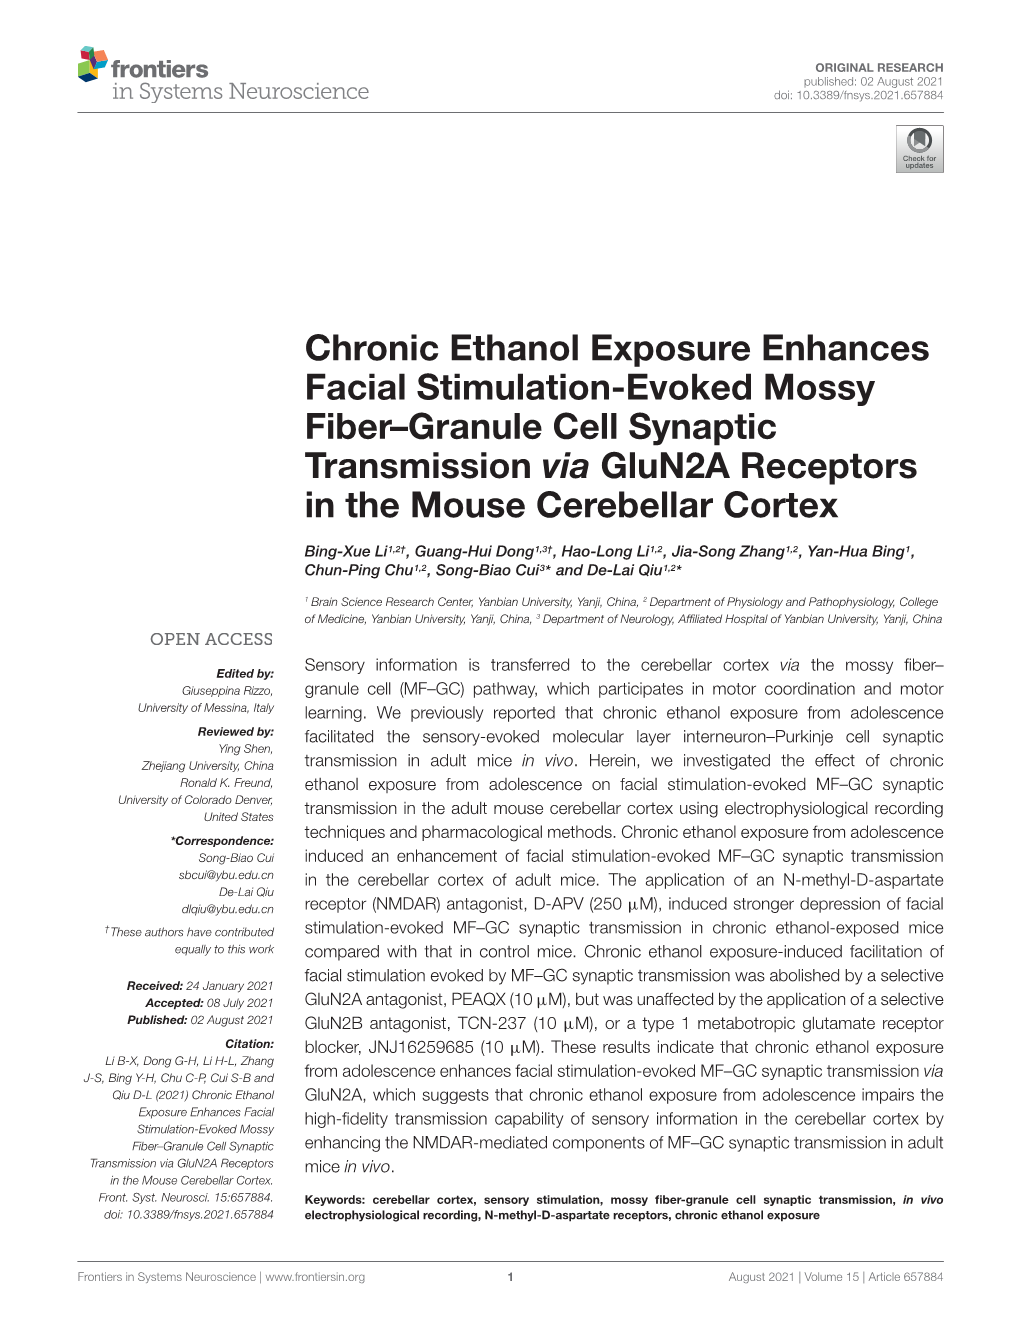 Chronic Ethanol Exposure Enhances Facial Stimulation-Evoked Mossy Fiber–Granule Cell Synaptic Transmission Via Glun2a Receptors in the Mouse Cerebellar Cortex